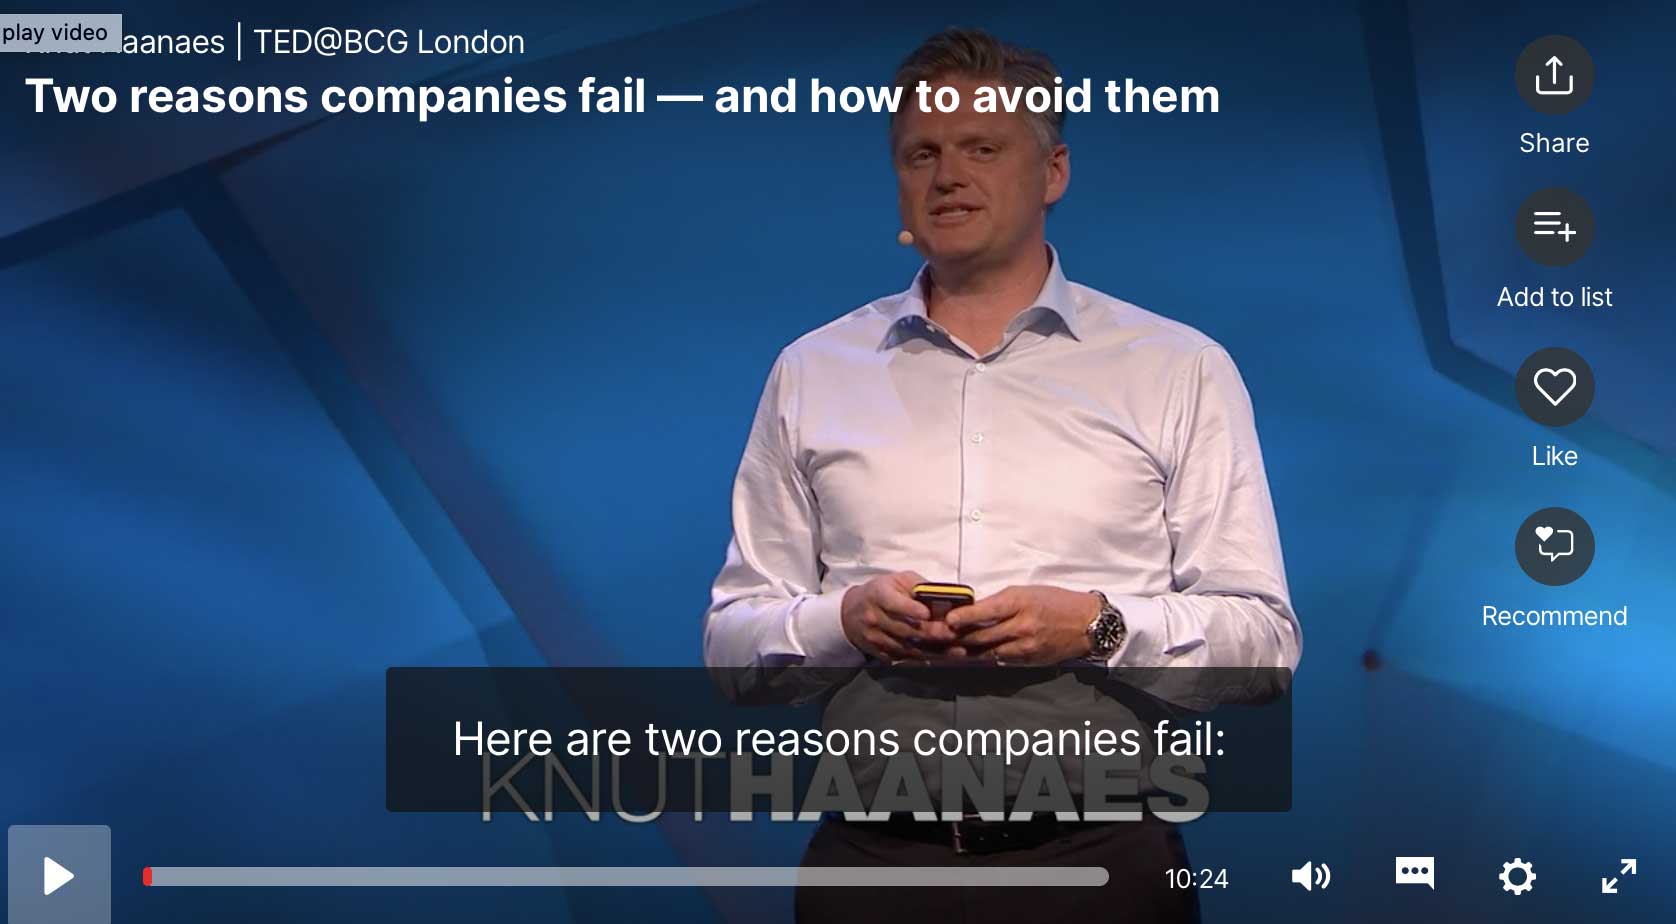 Two reasons why companies fail